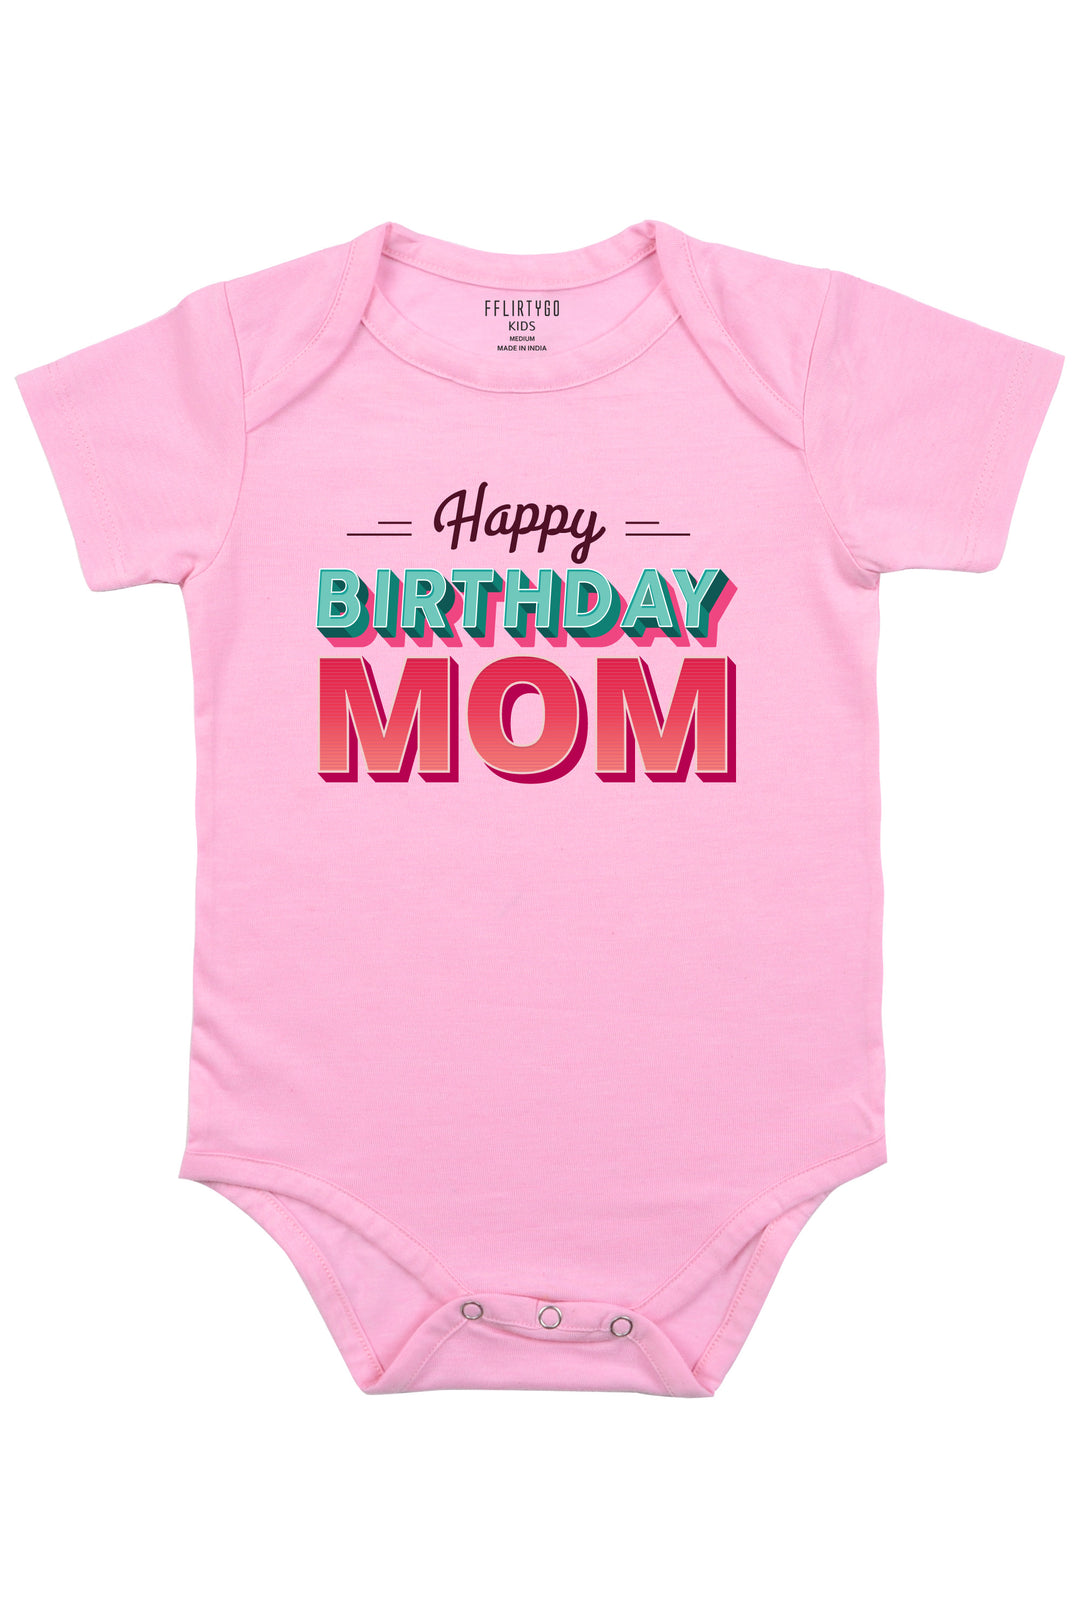 Happy Birthday Mom Baby Romper | Onesies